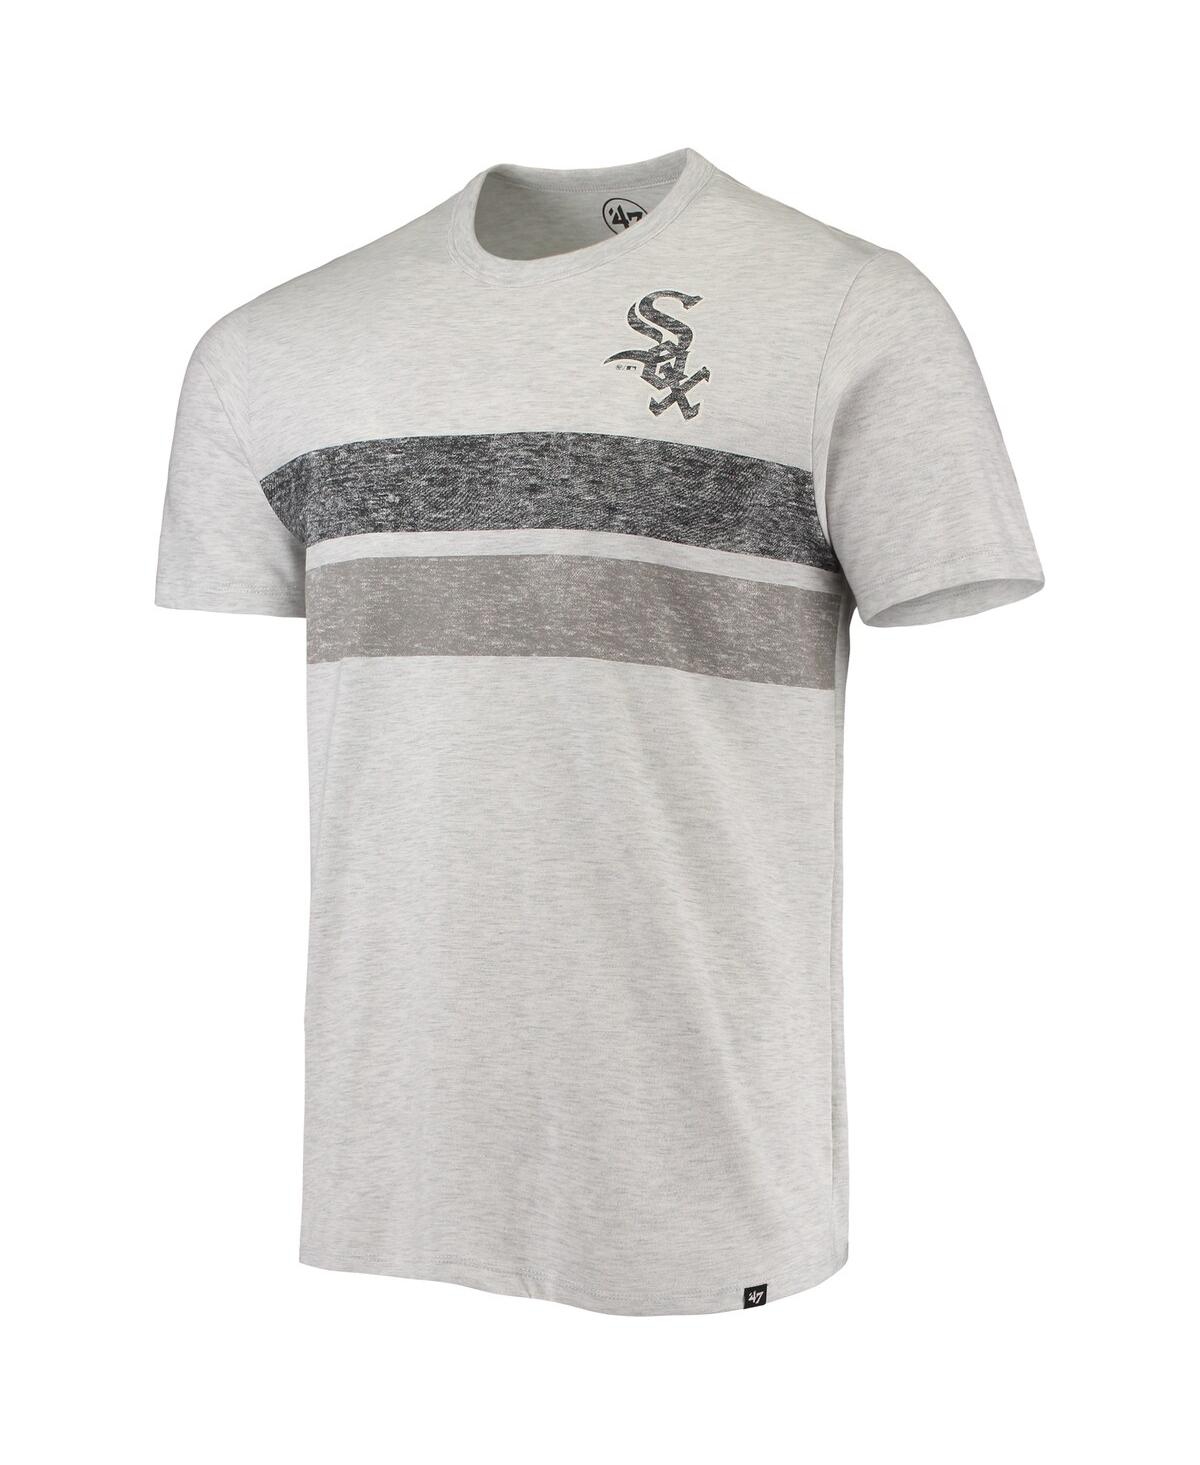 47 Men's Chicago White Sox Bars Franklin T-Shirt - Gray - S (Small)